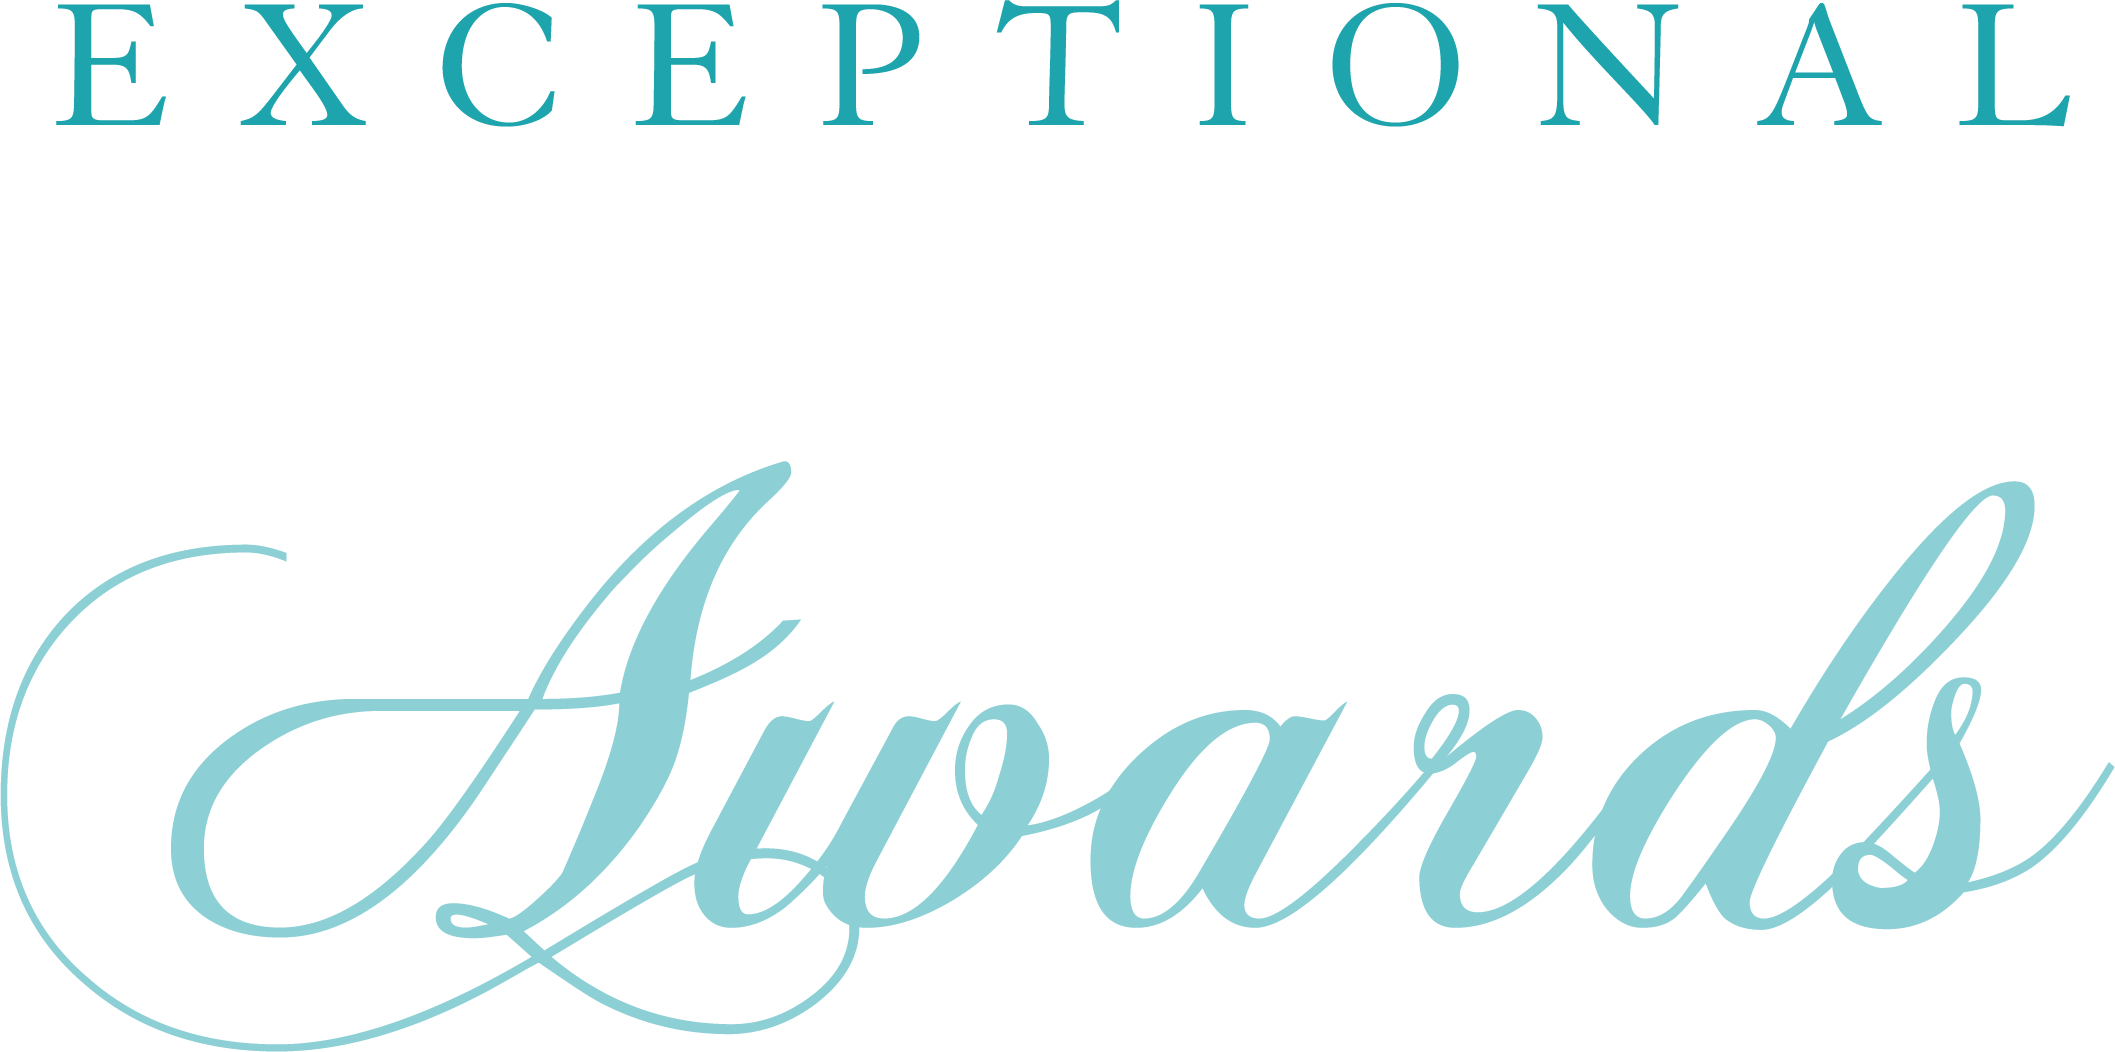 Exceptional Physician Awards logo